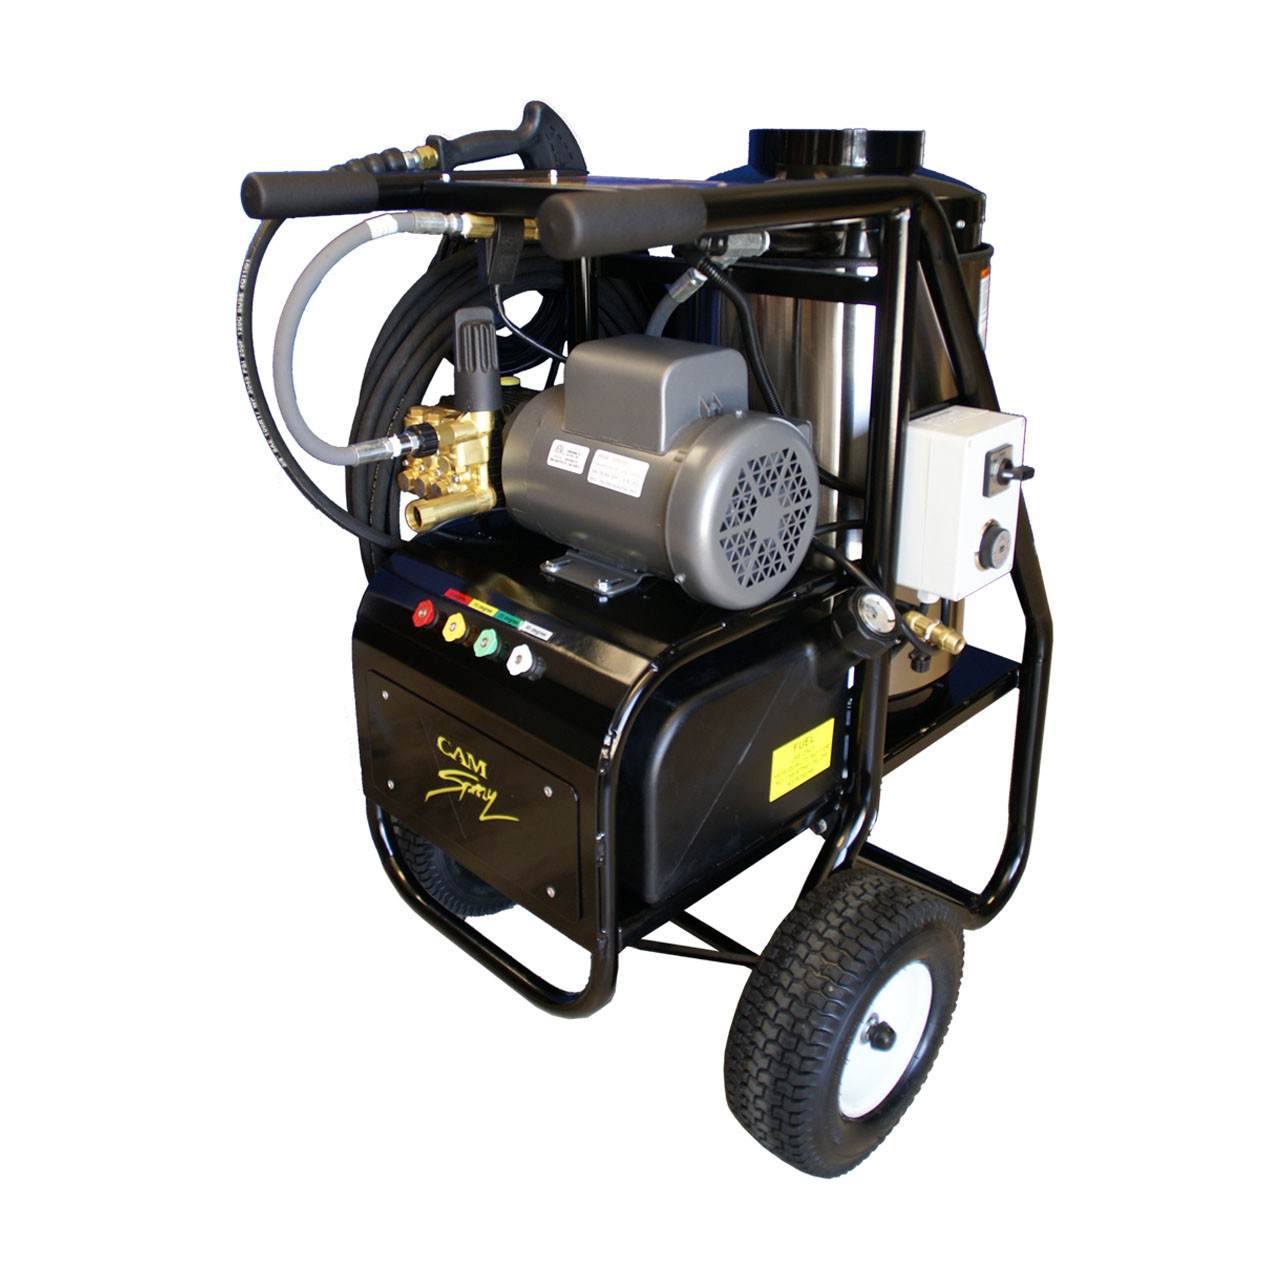 SH Series Electric Pressure Washers Heated by Diesel Fuel